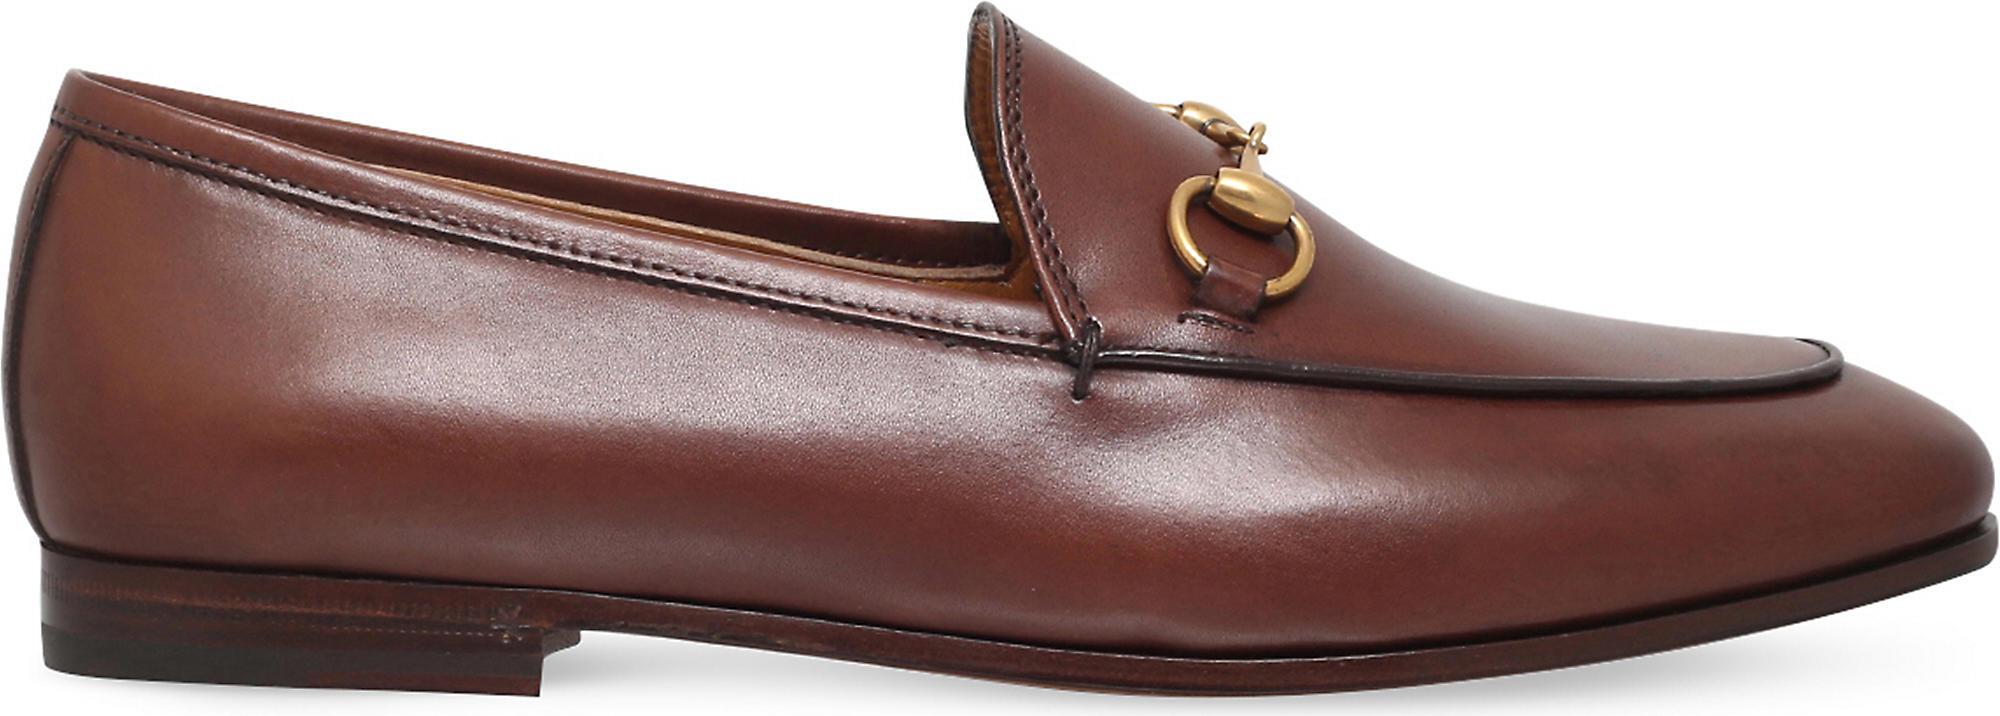 Gucci Jordaan Leather Loafers in Dark Brown (Brown) - Save 27% - Lyst